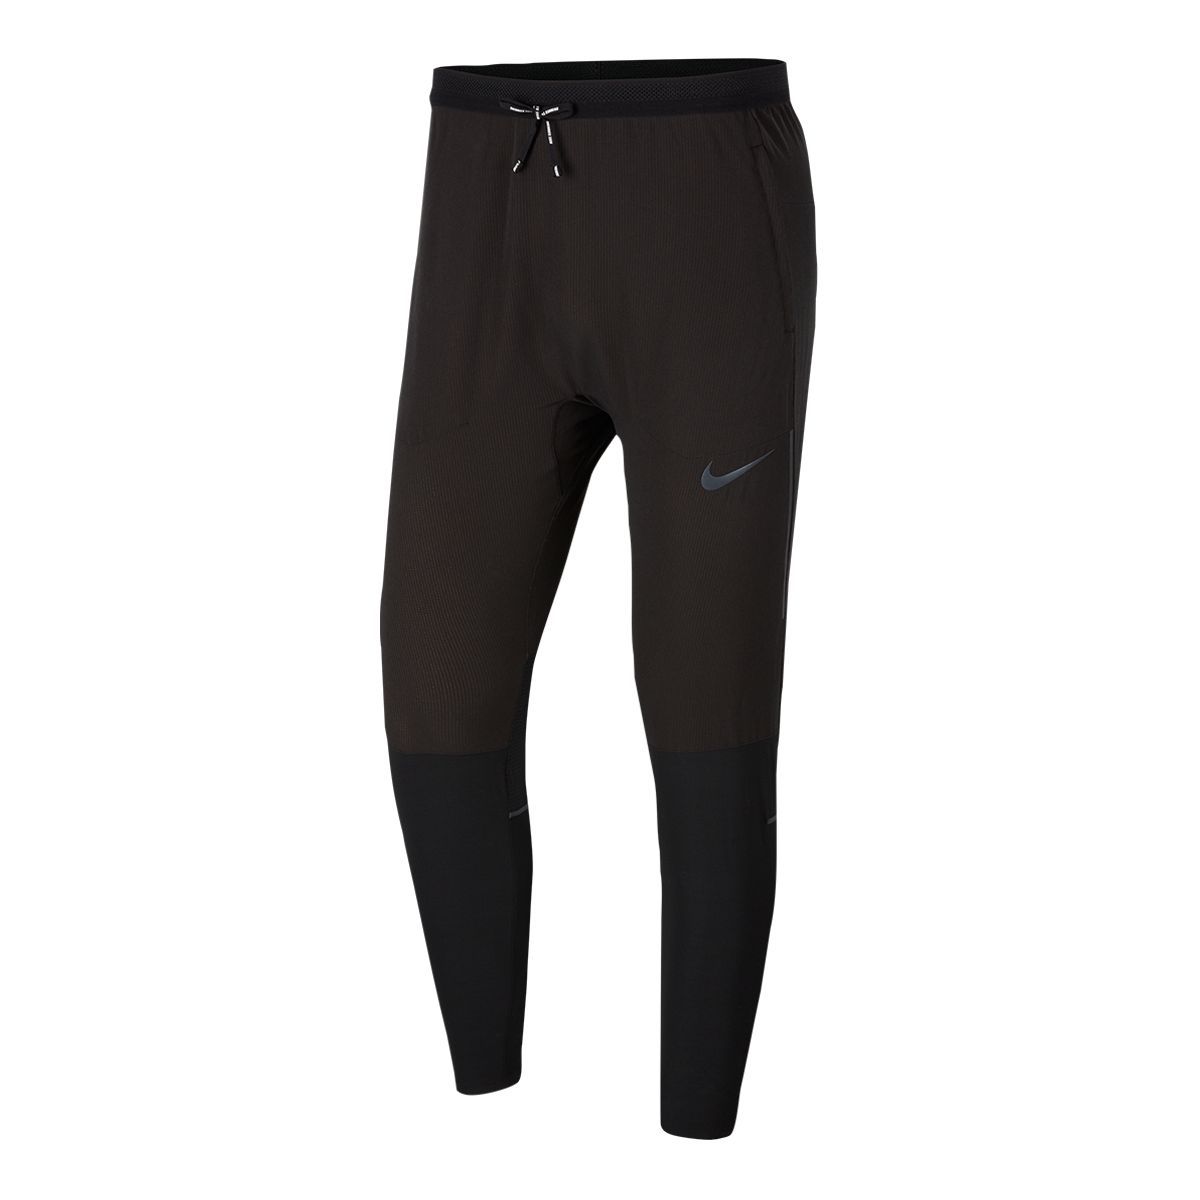 Nike Men's Swift Run Woven Pants